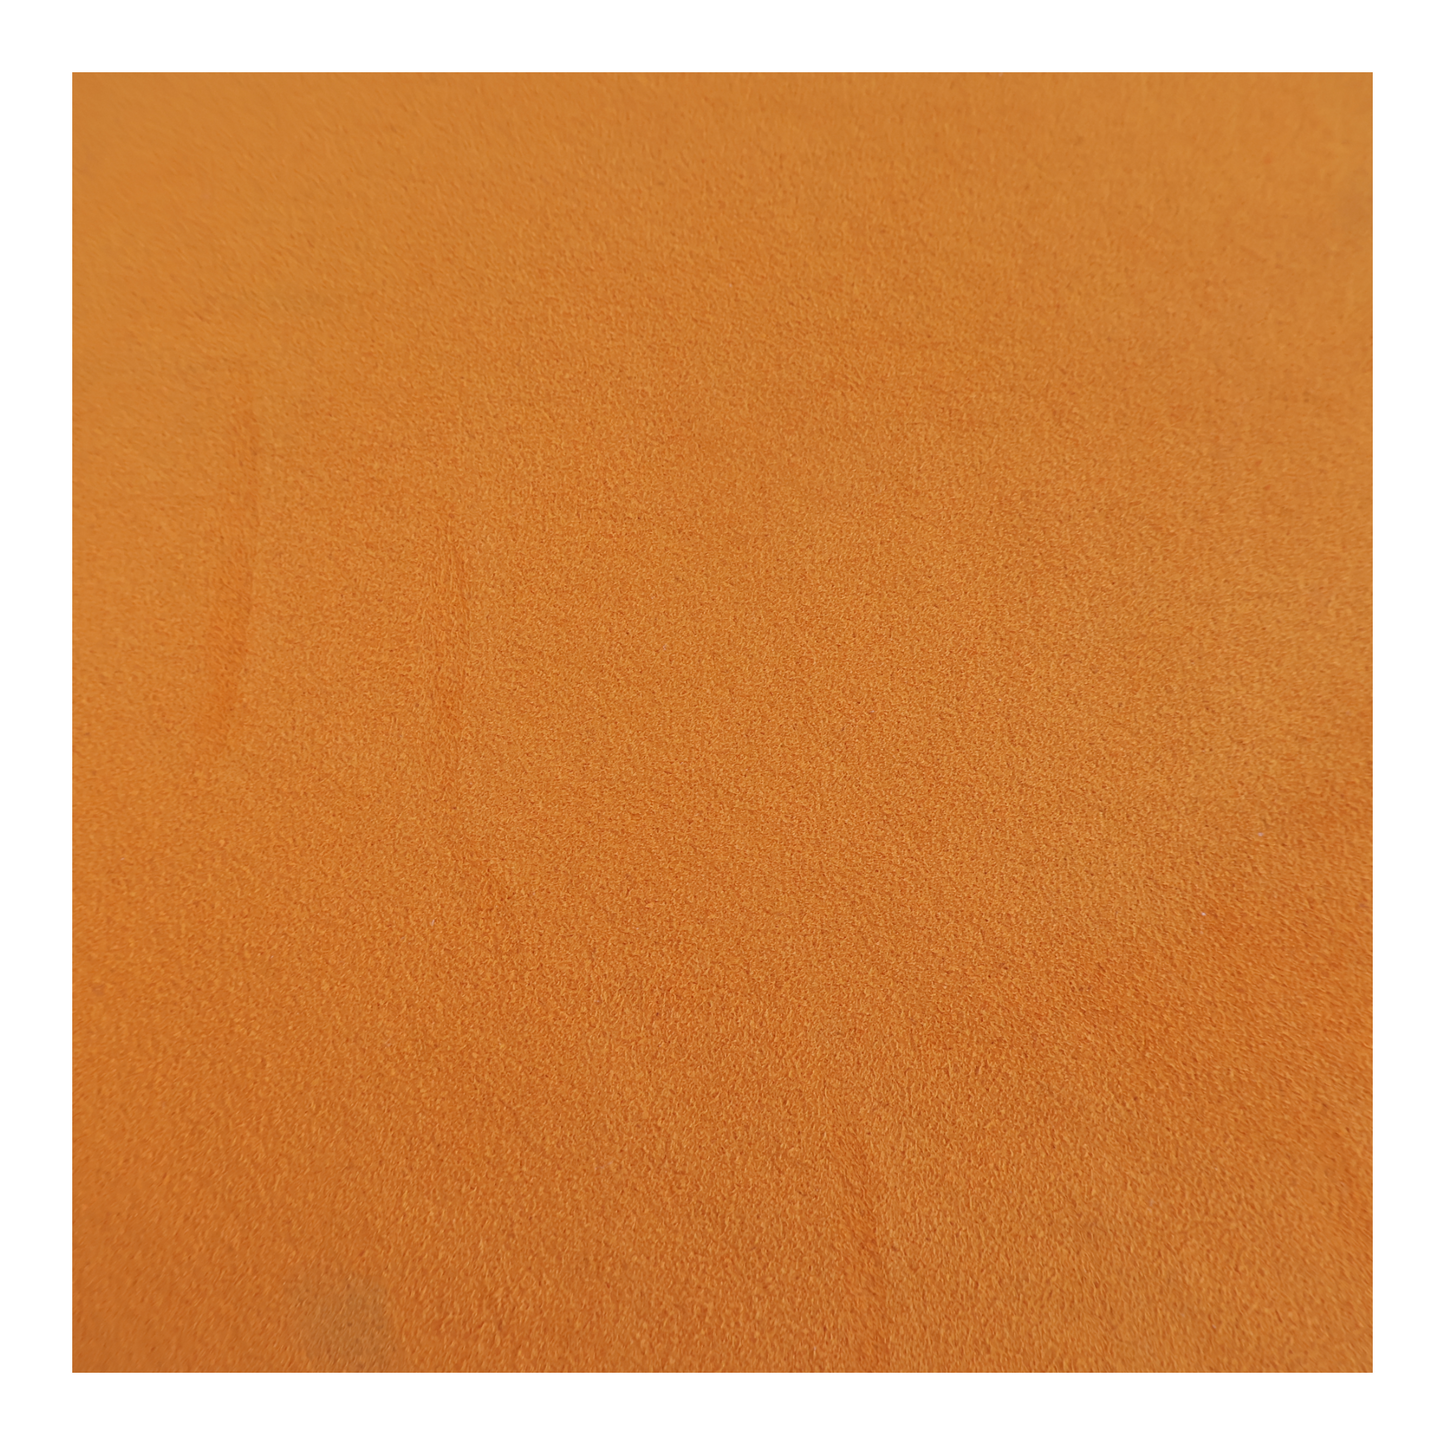 Materia Bonan barstoler i fargen oransje